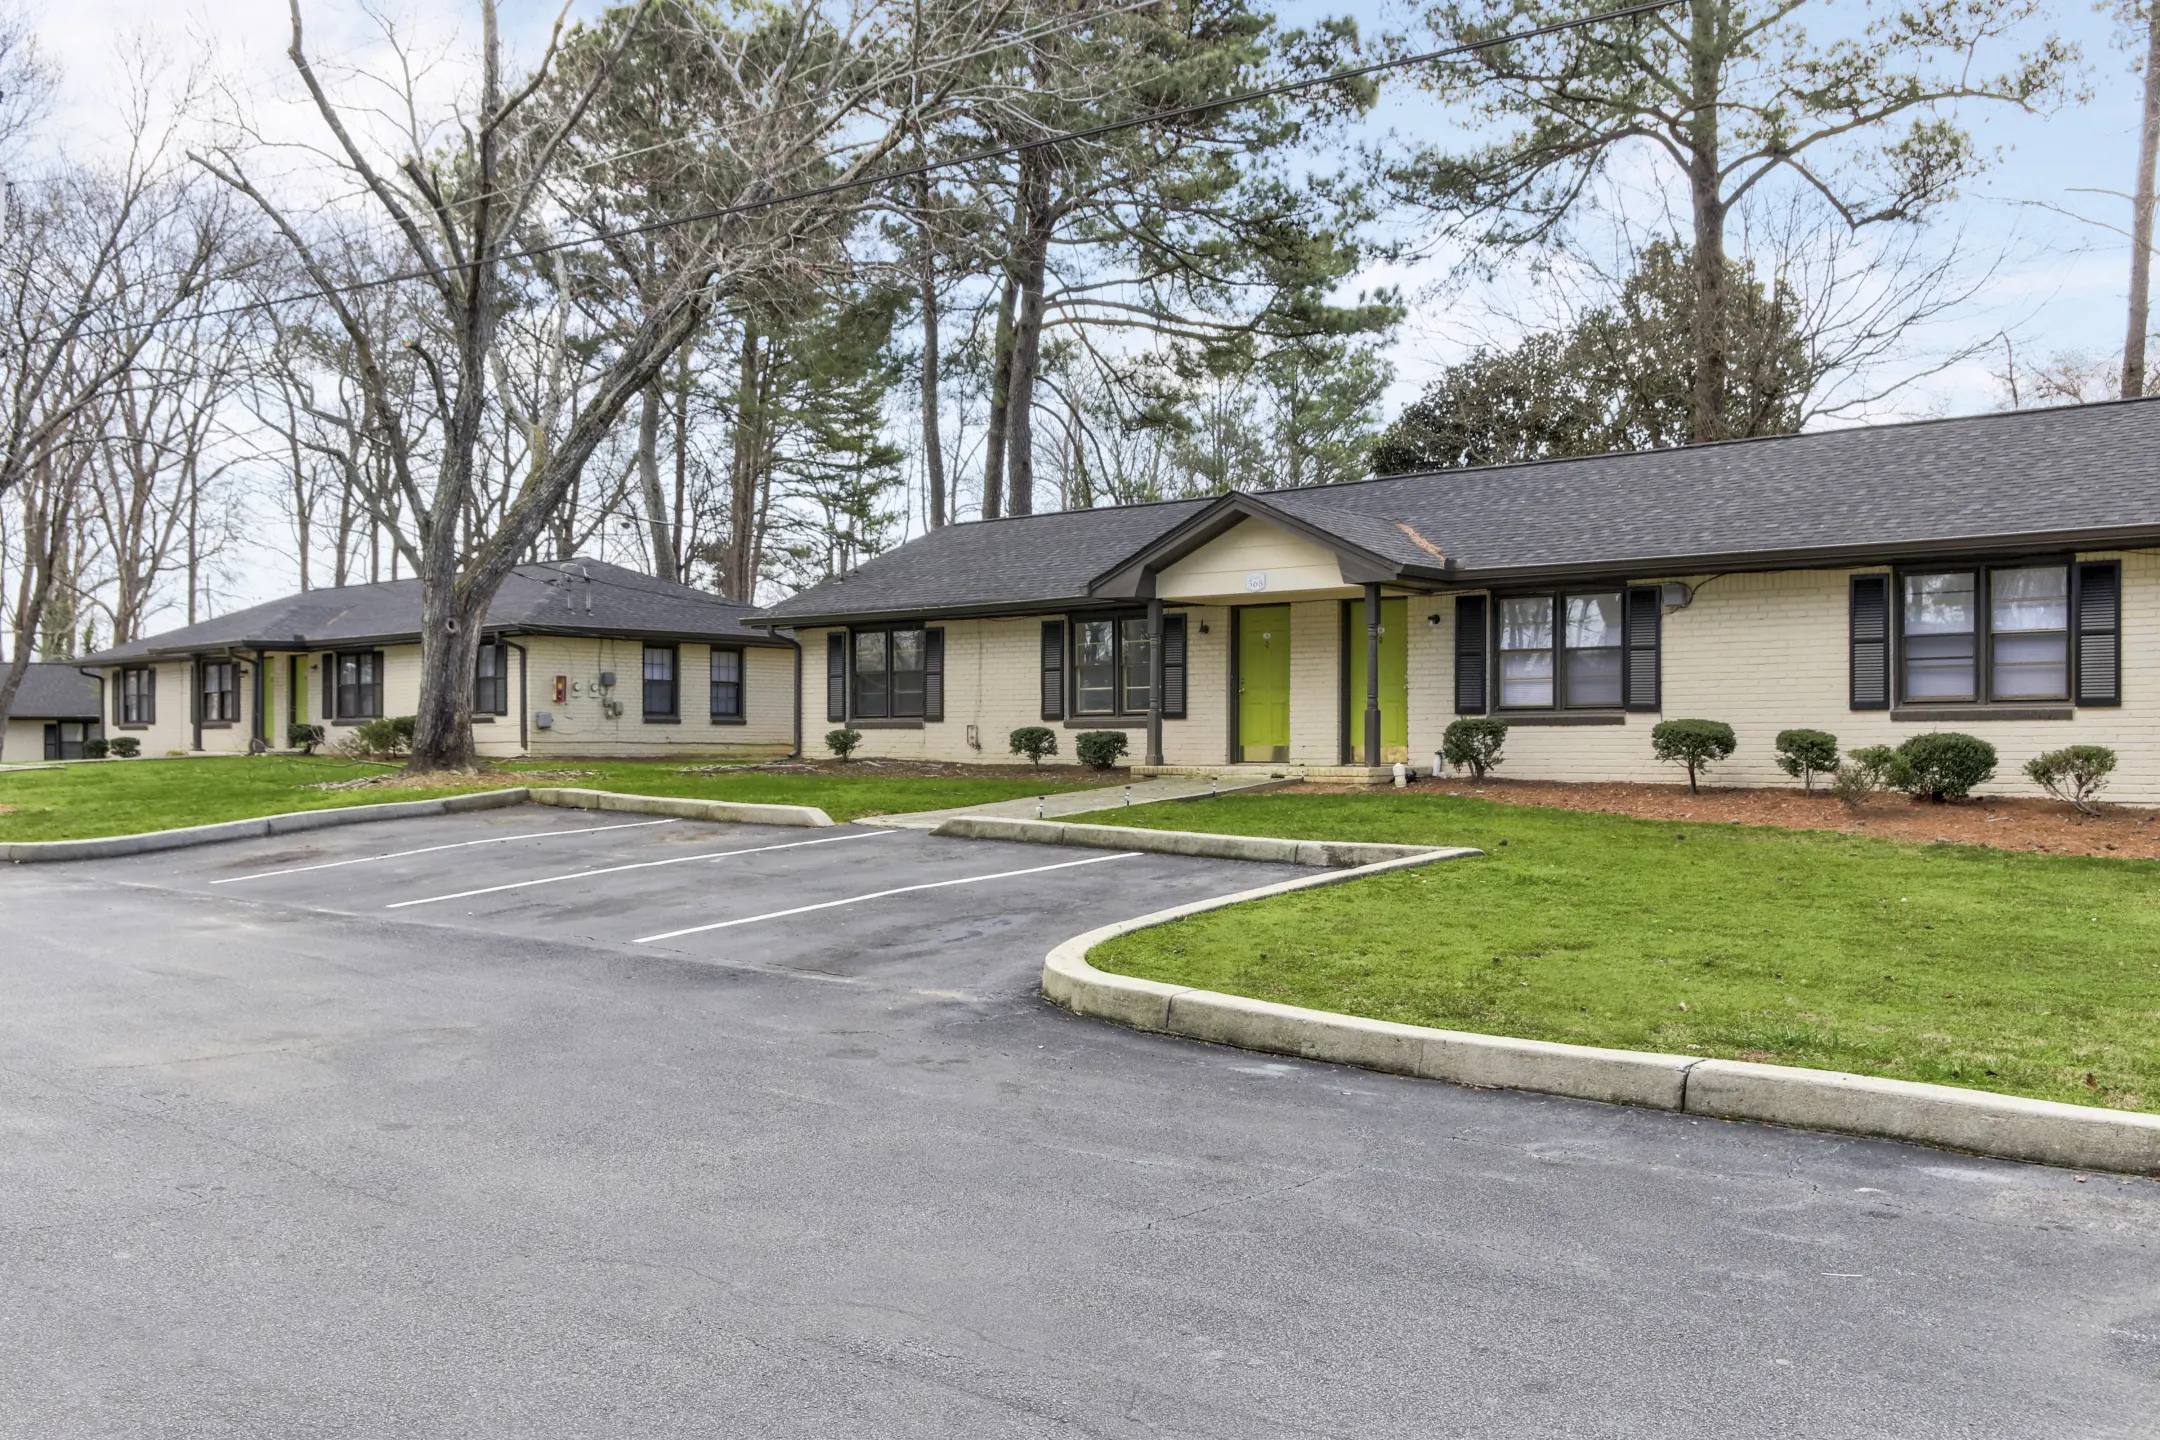 Building - Bluestone Manor - Lawrenceville, GA